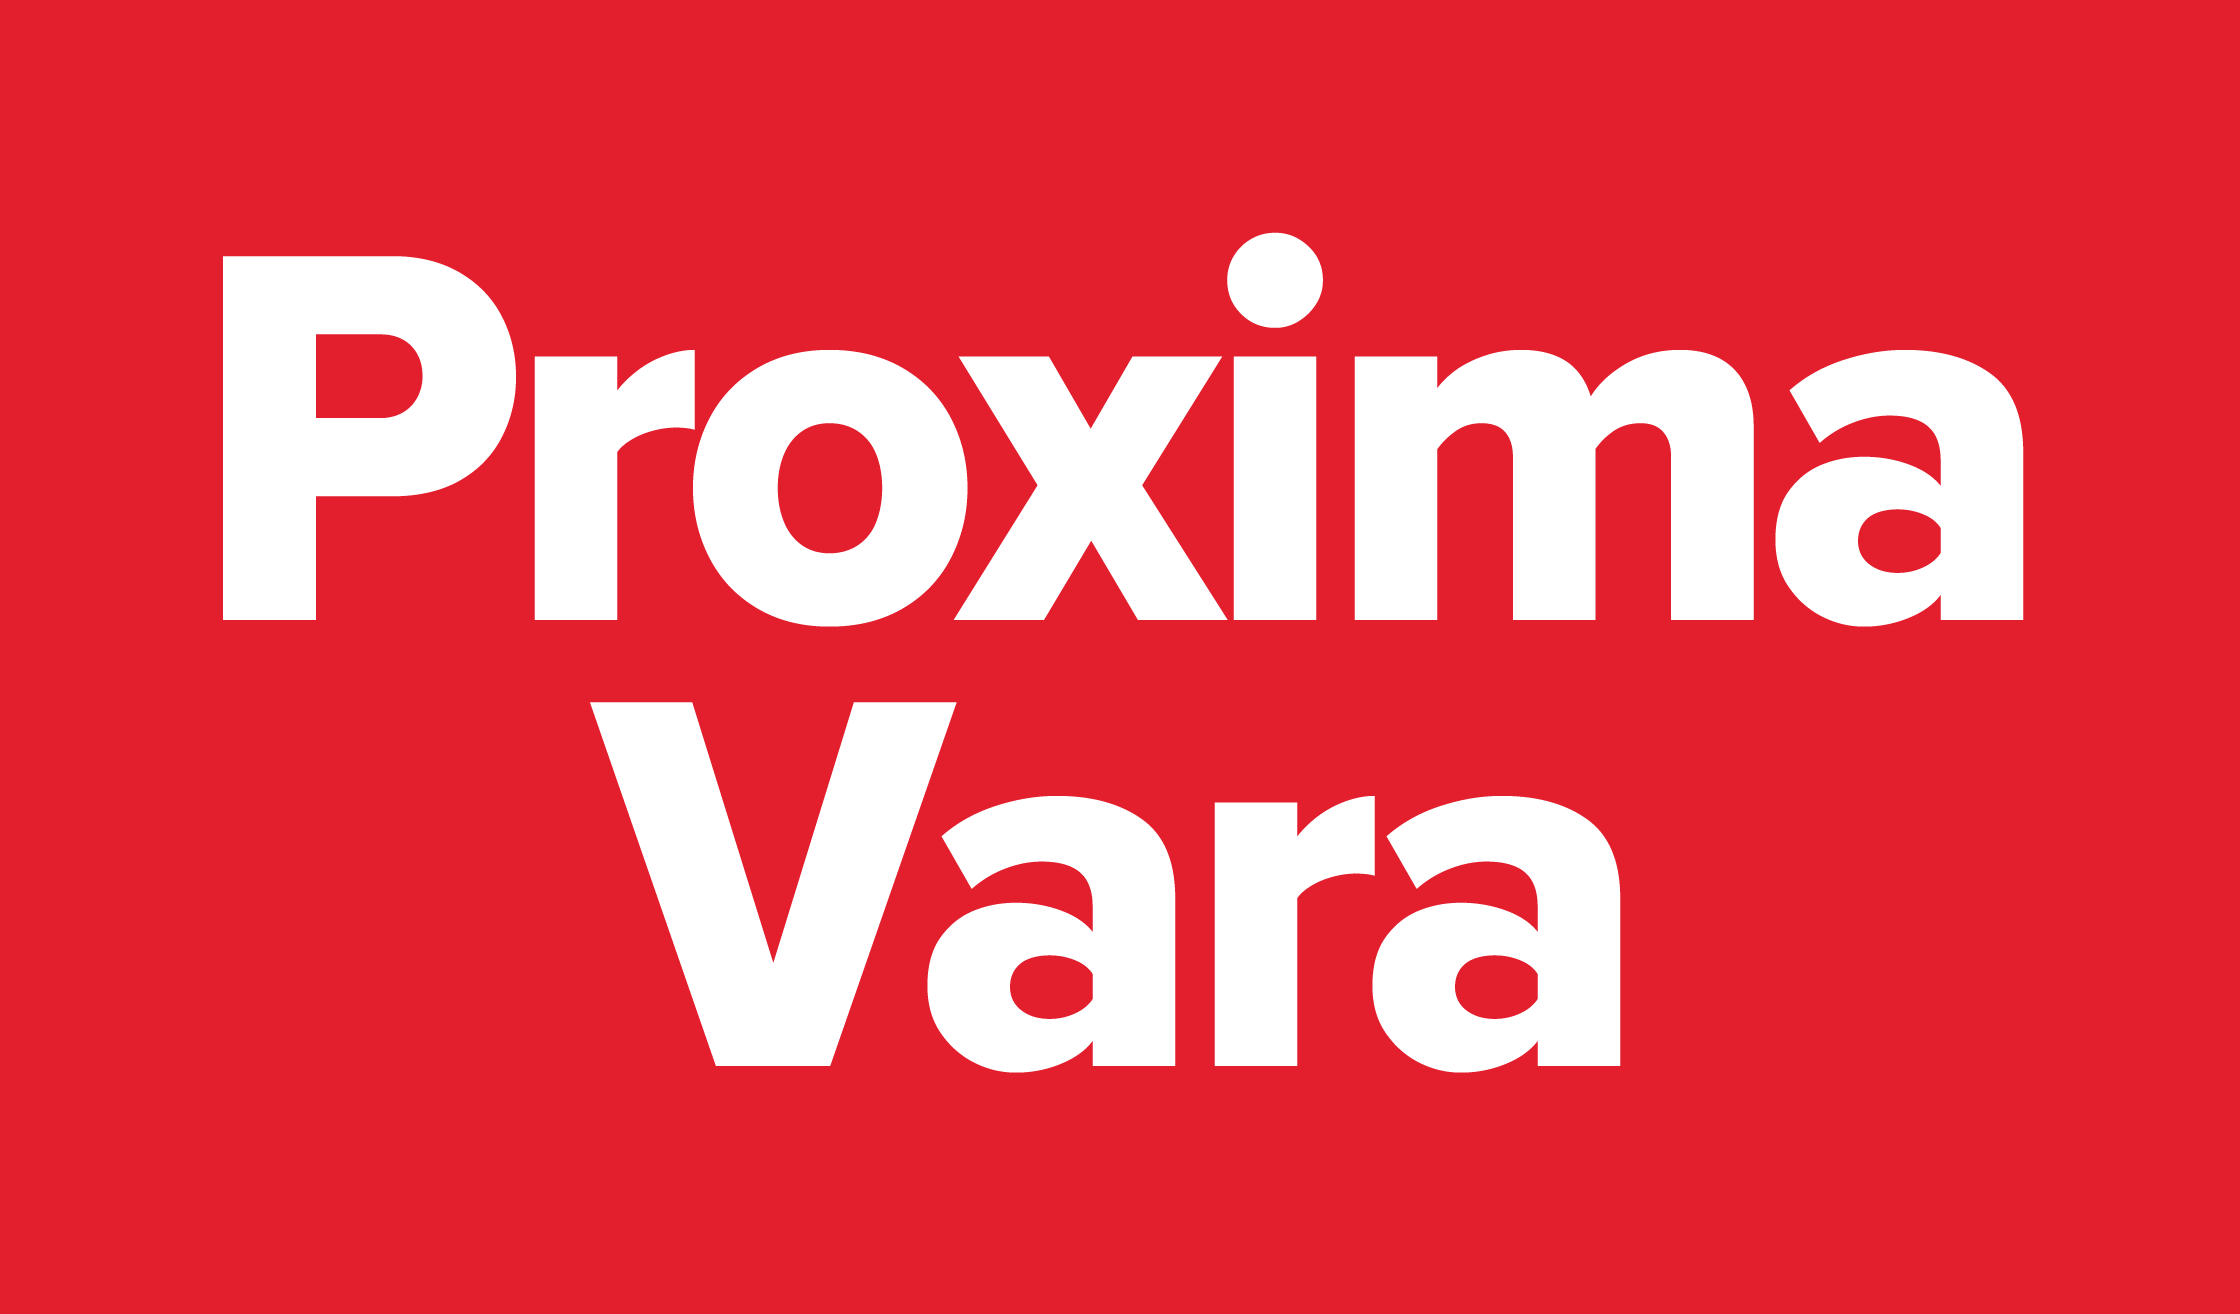 Proxima Vara - Mark Simonson